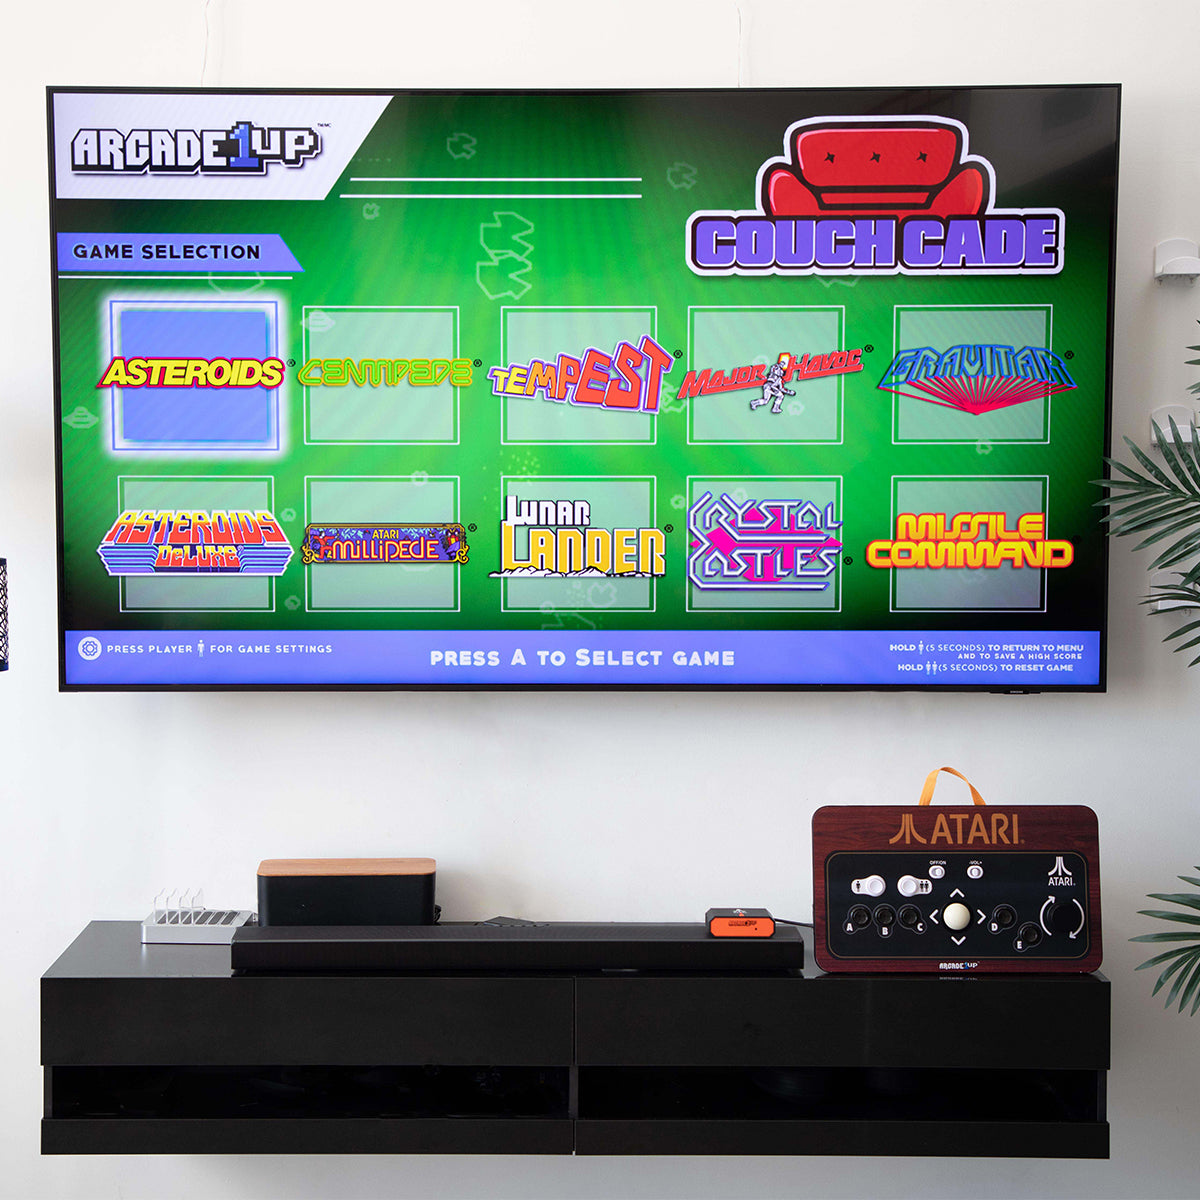 Arcade1Up Couch Cade -Atari